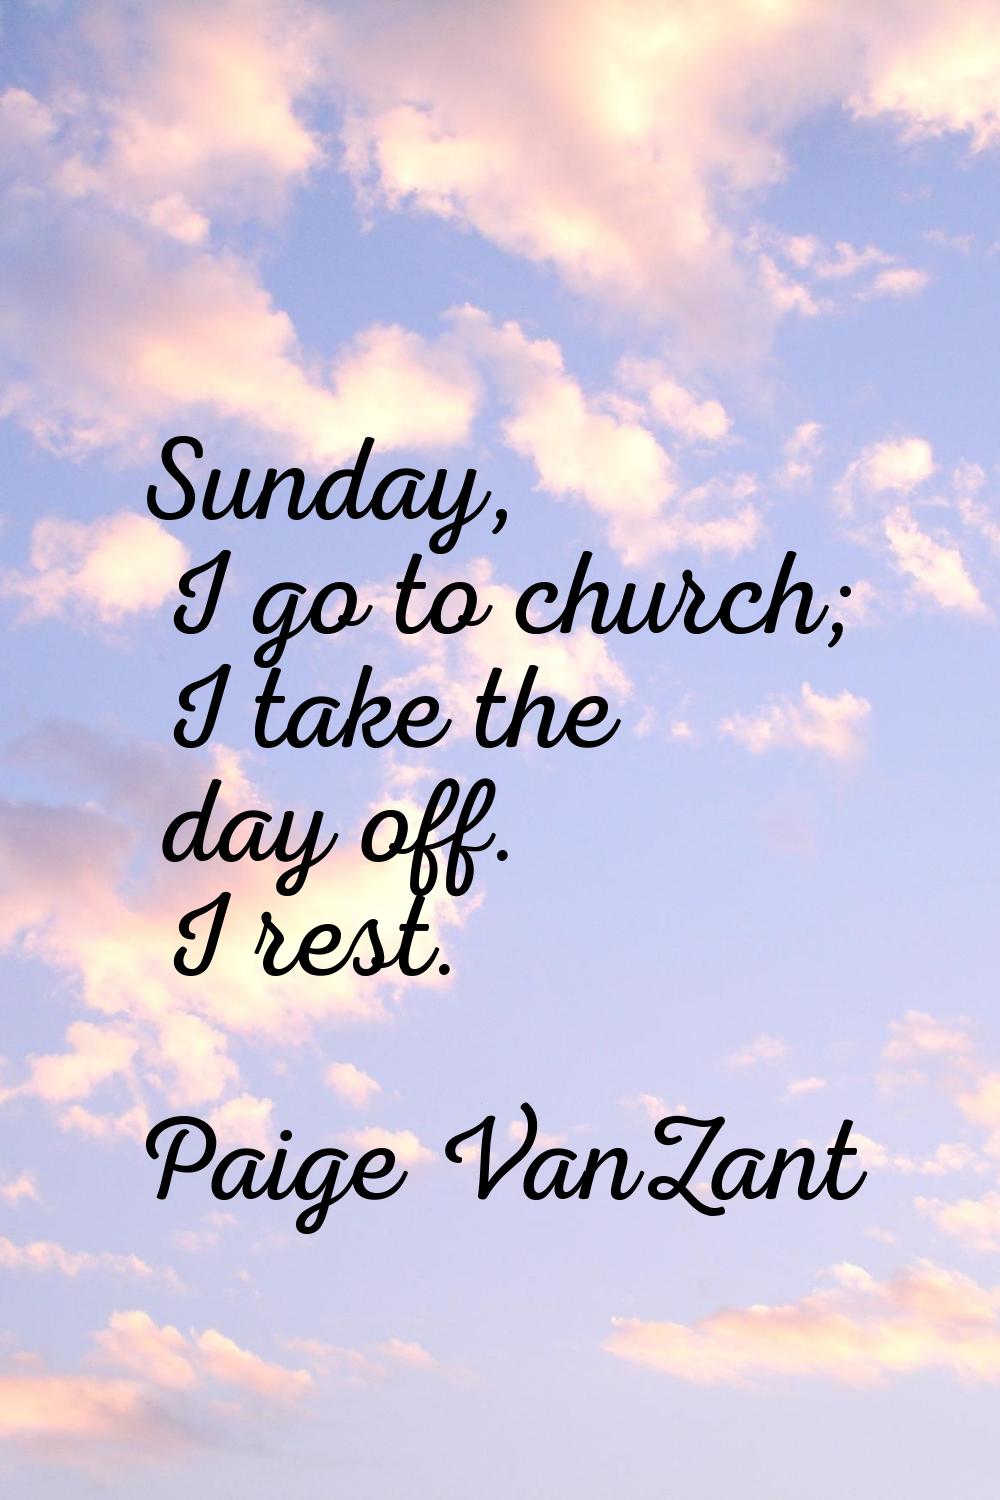 Sunday, I go to church; I take the day off. I rest.